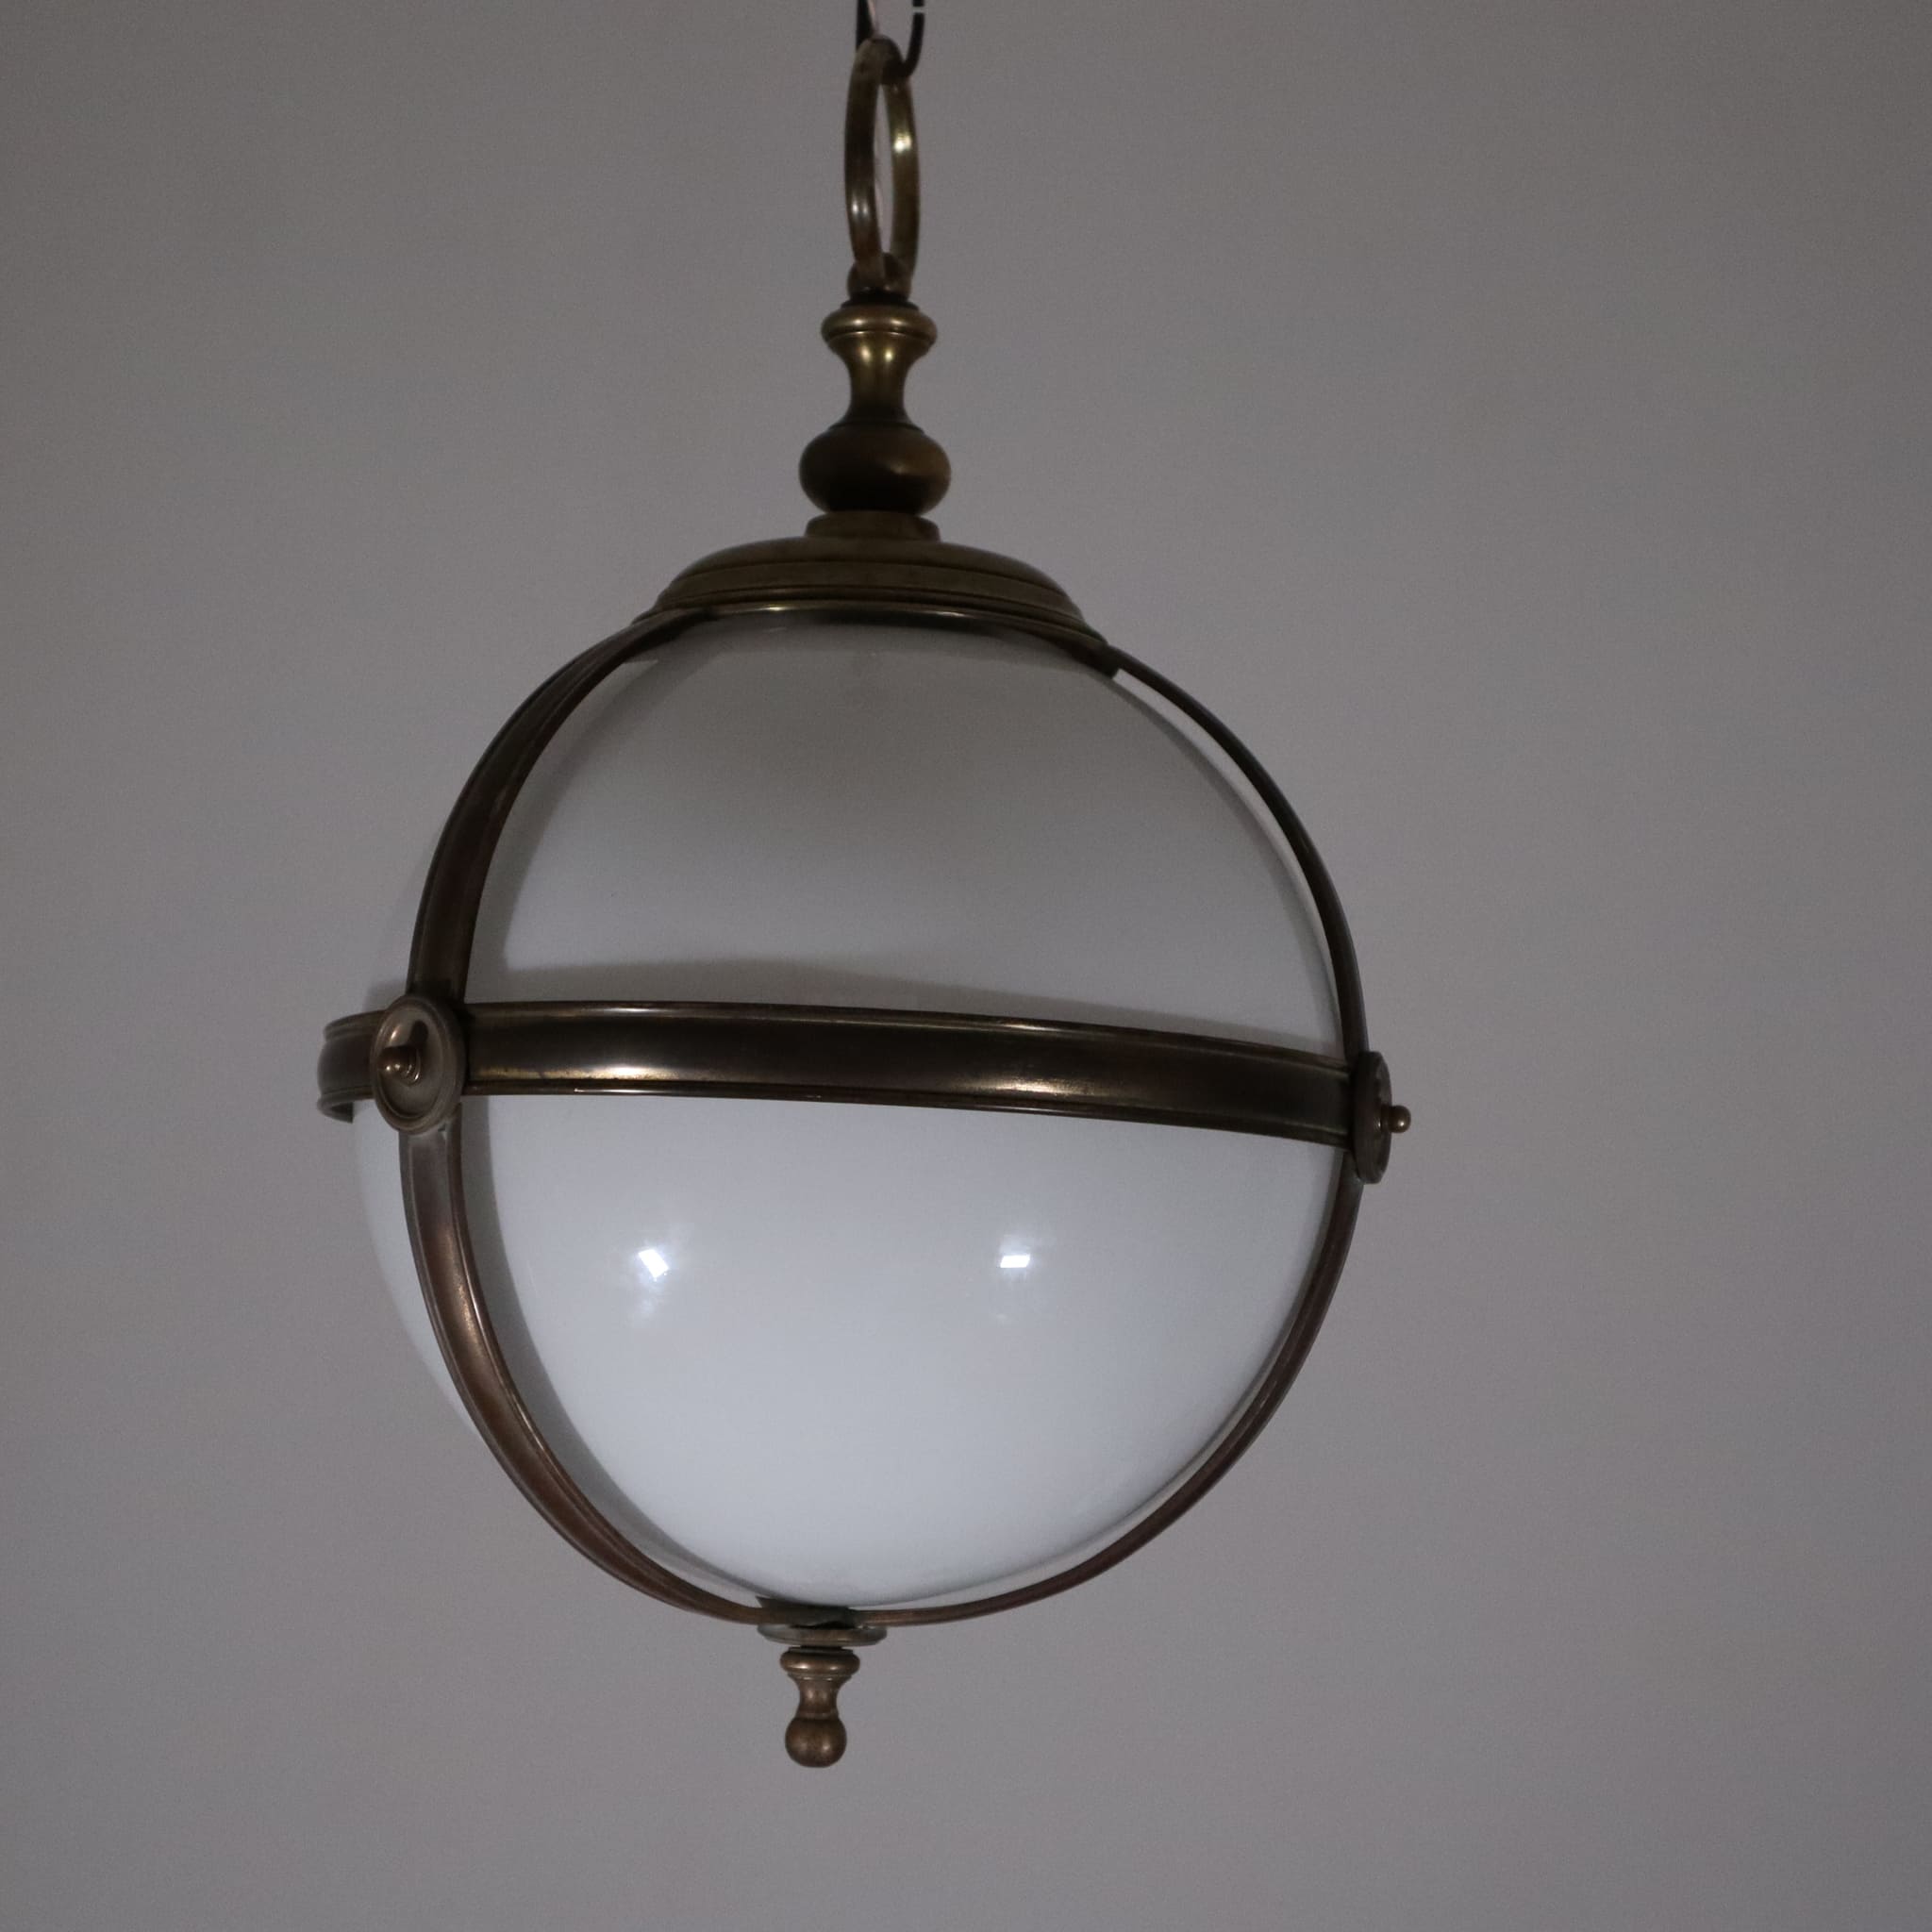 visionidepoca-visioni-depoca-chendelier-brass-ball-opaline-white-modern-vintage-design-made-italy-4